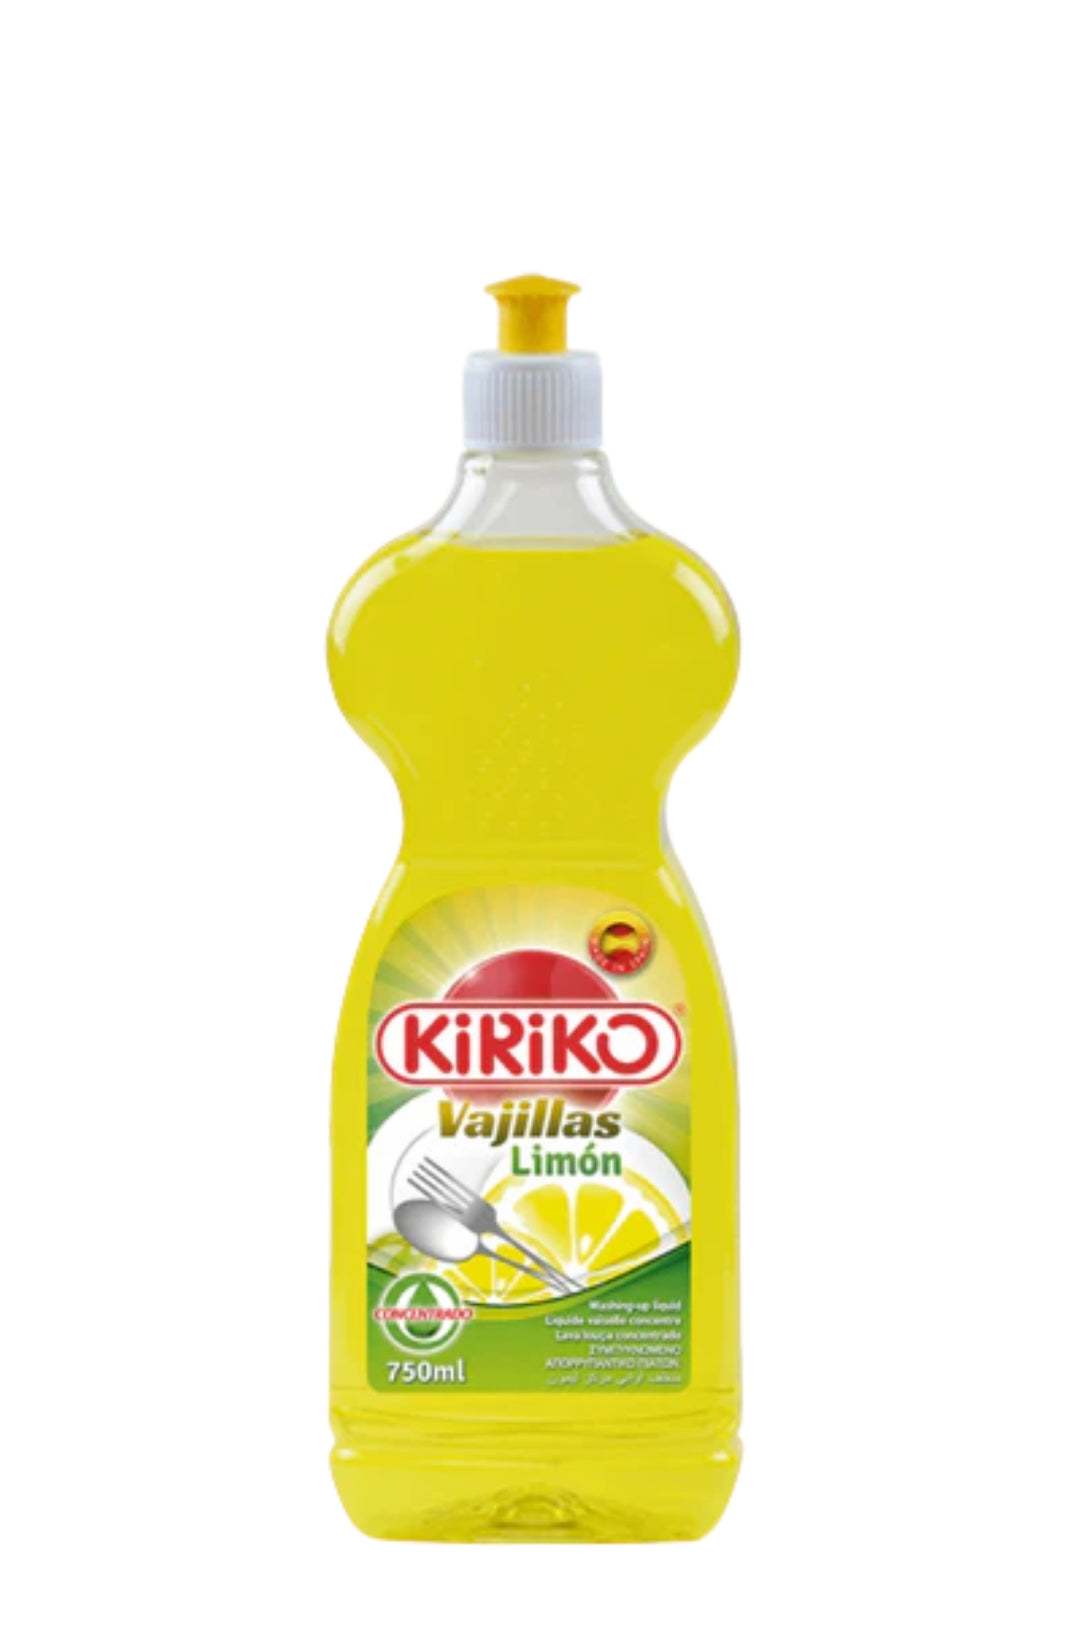 Kiriko Lemon Washing up Liquid